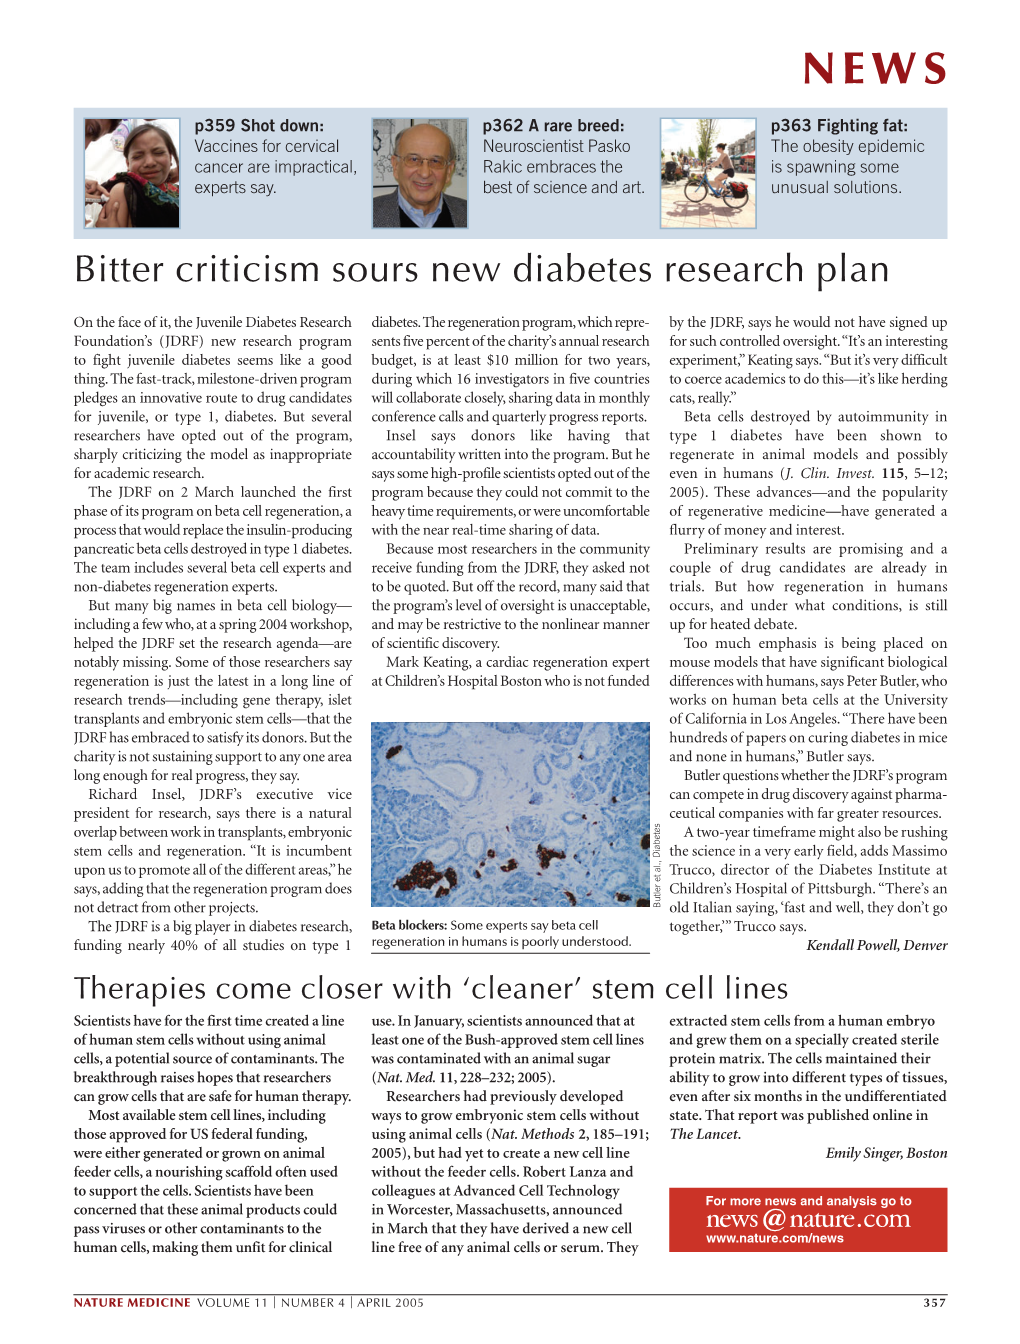 Bitter Criticism Sours New Diabetes Research Plan